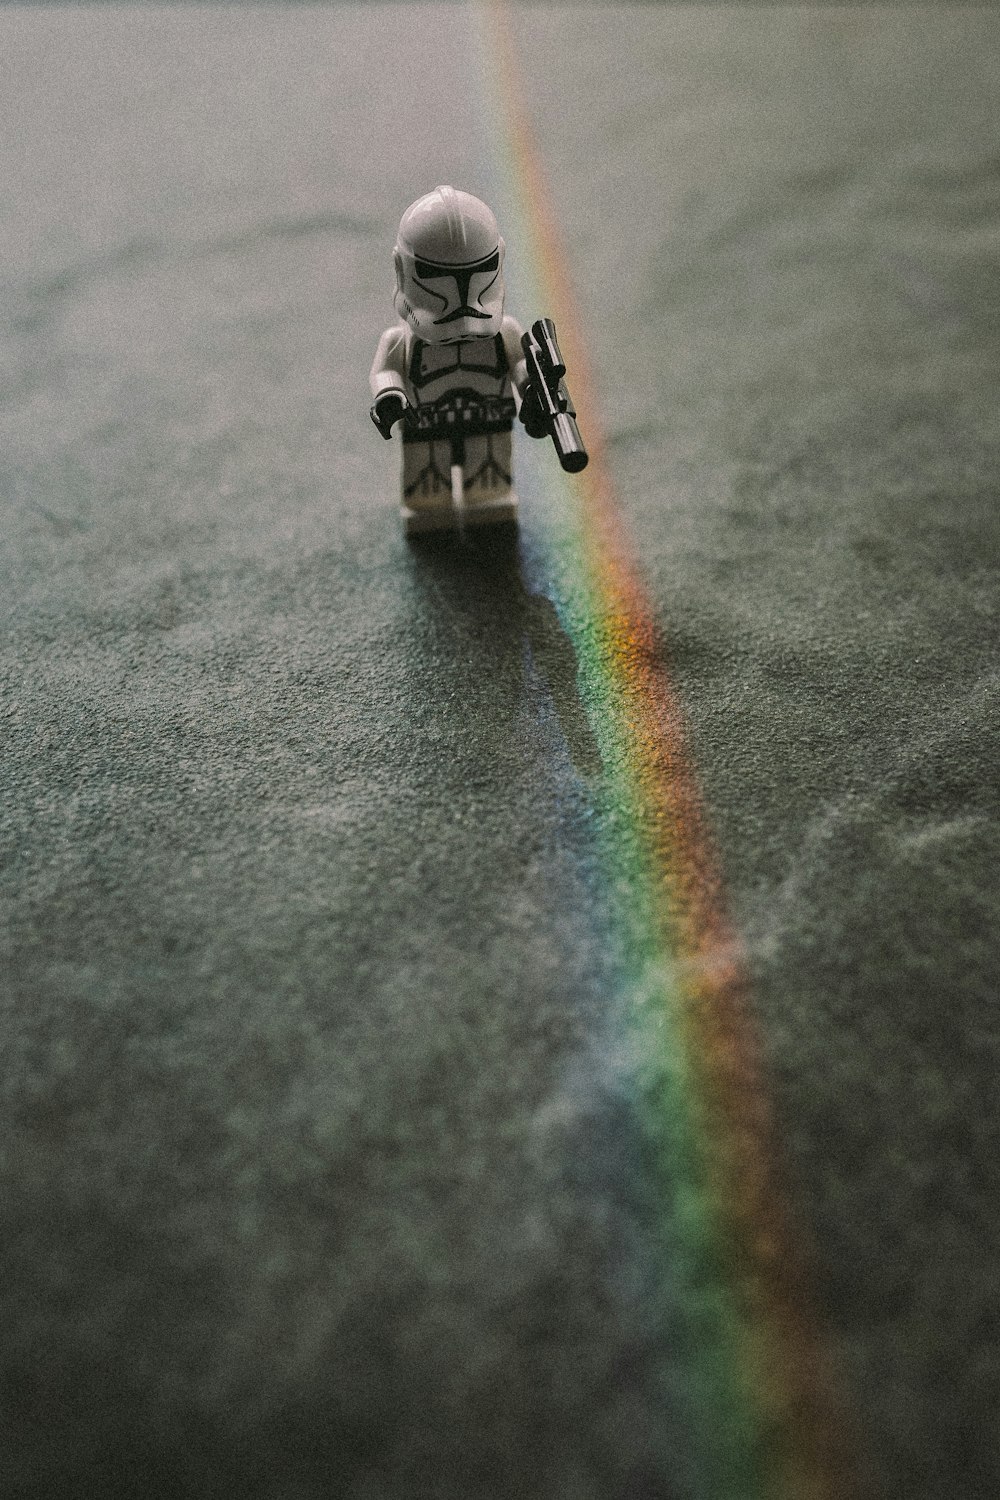 a toy astronaut with a rainbow